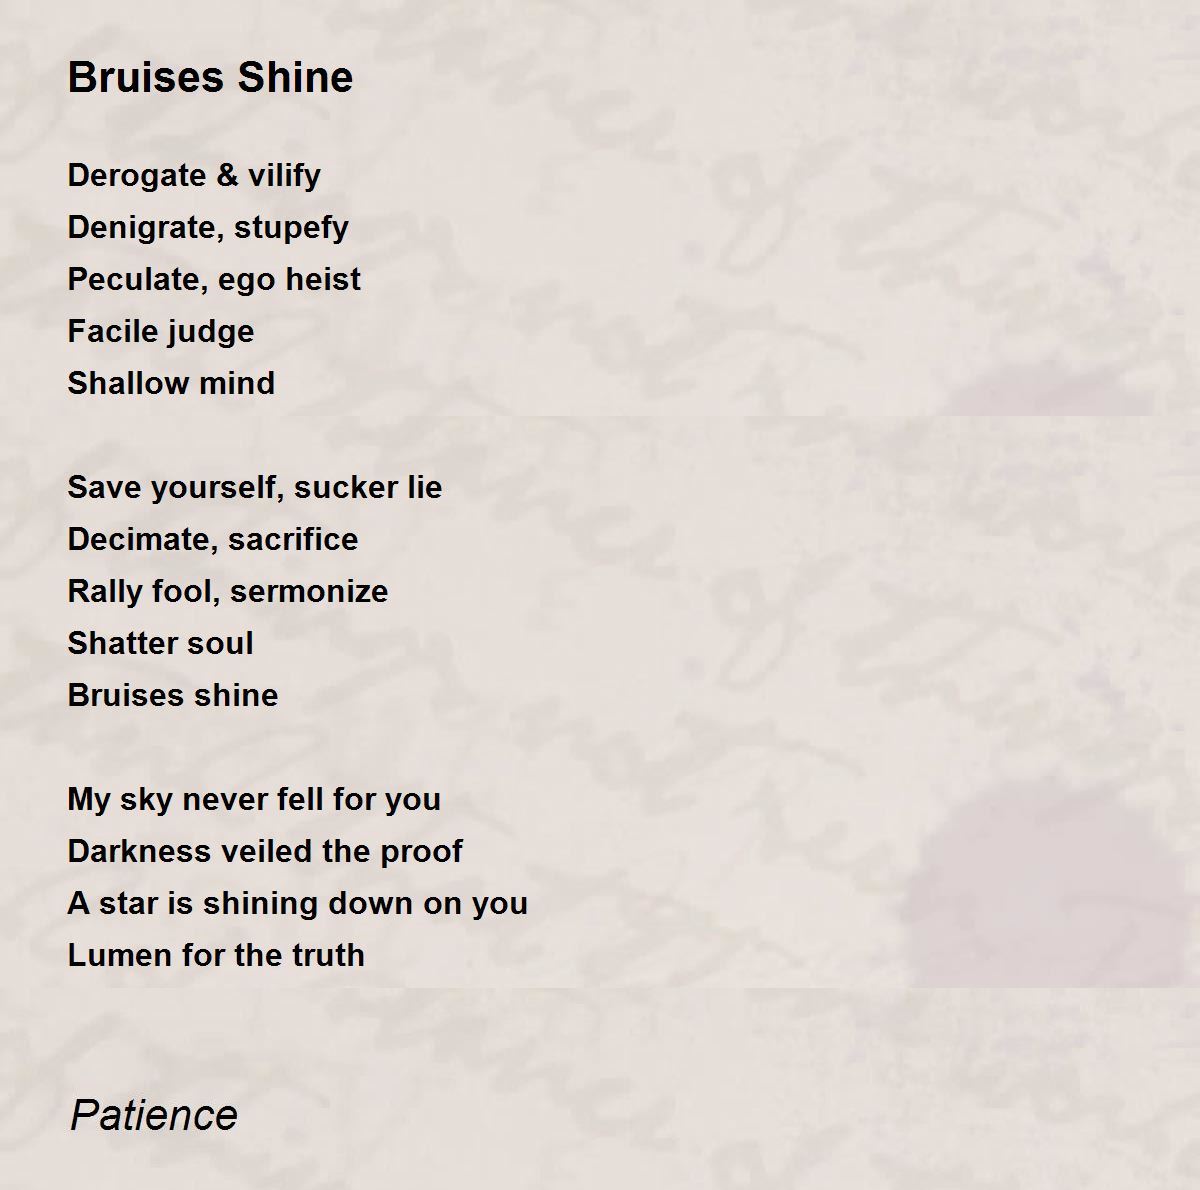 https://img.poemhunter.com/i/poem_images/570/bruises-shine.jpg